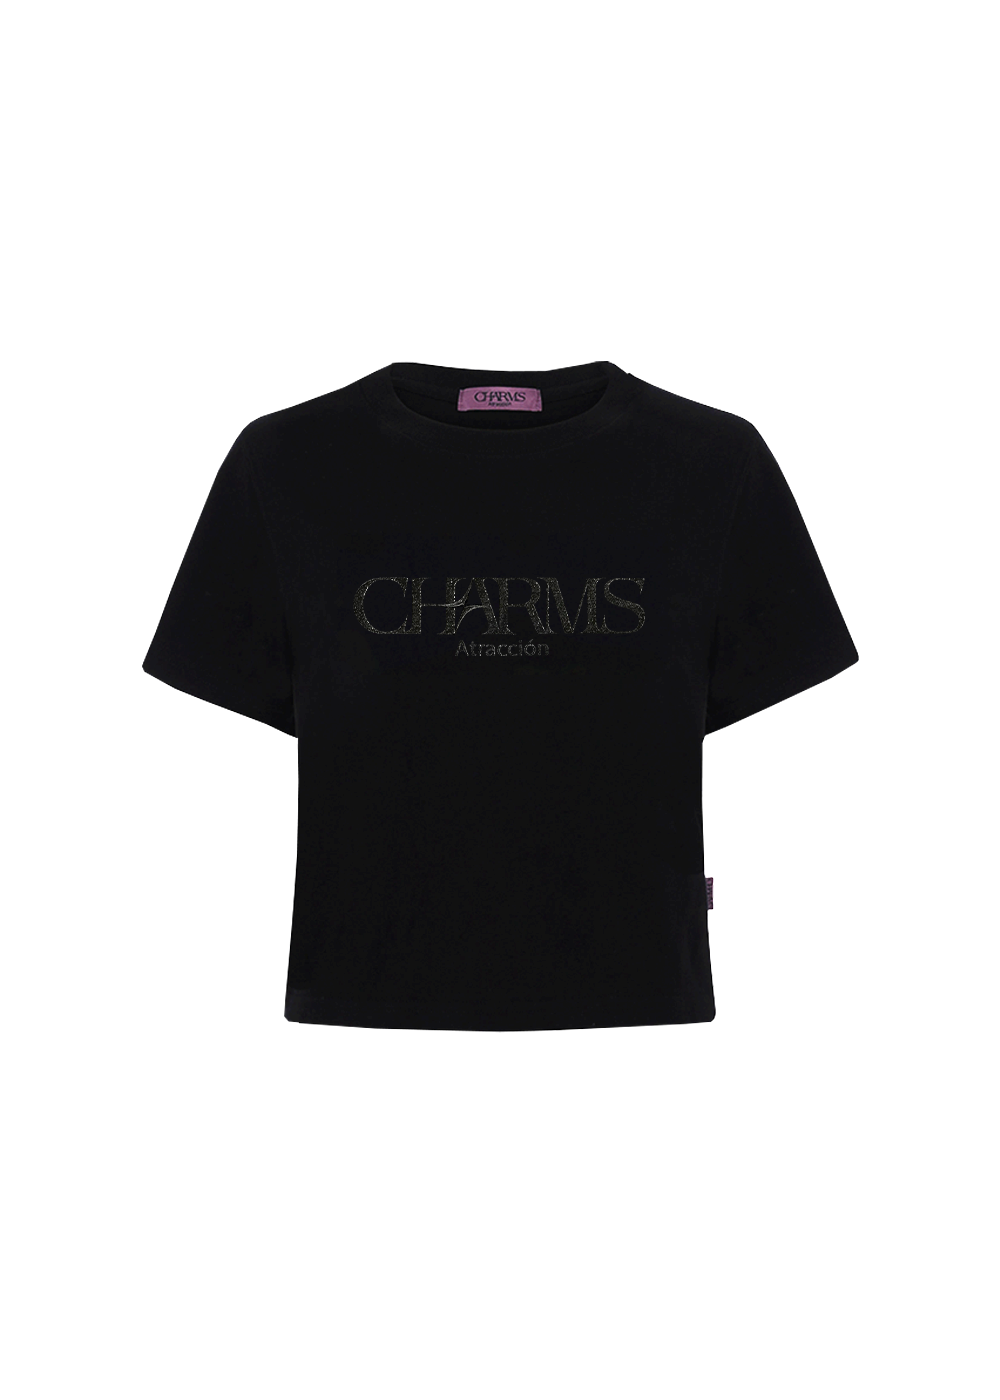 CHARMS Signature Crop T-shirt - BLACK